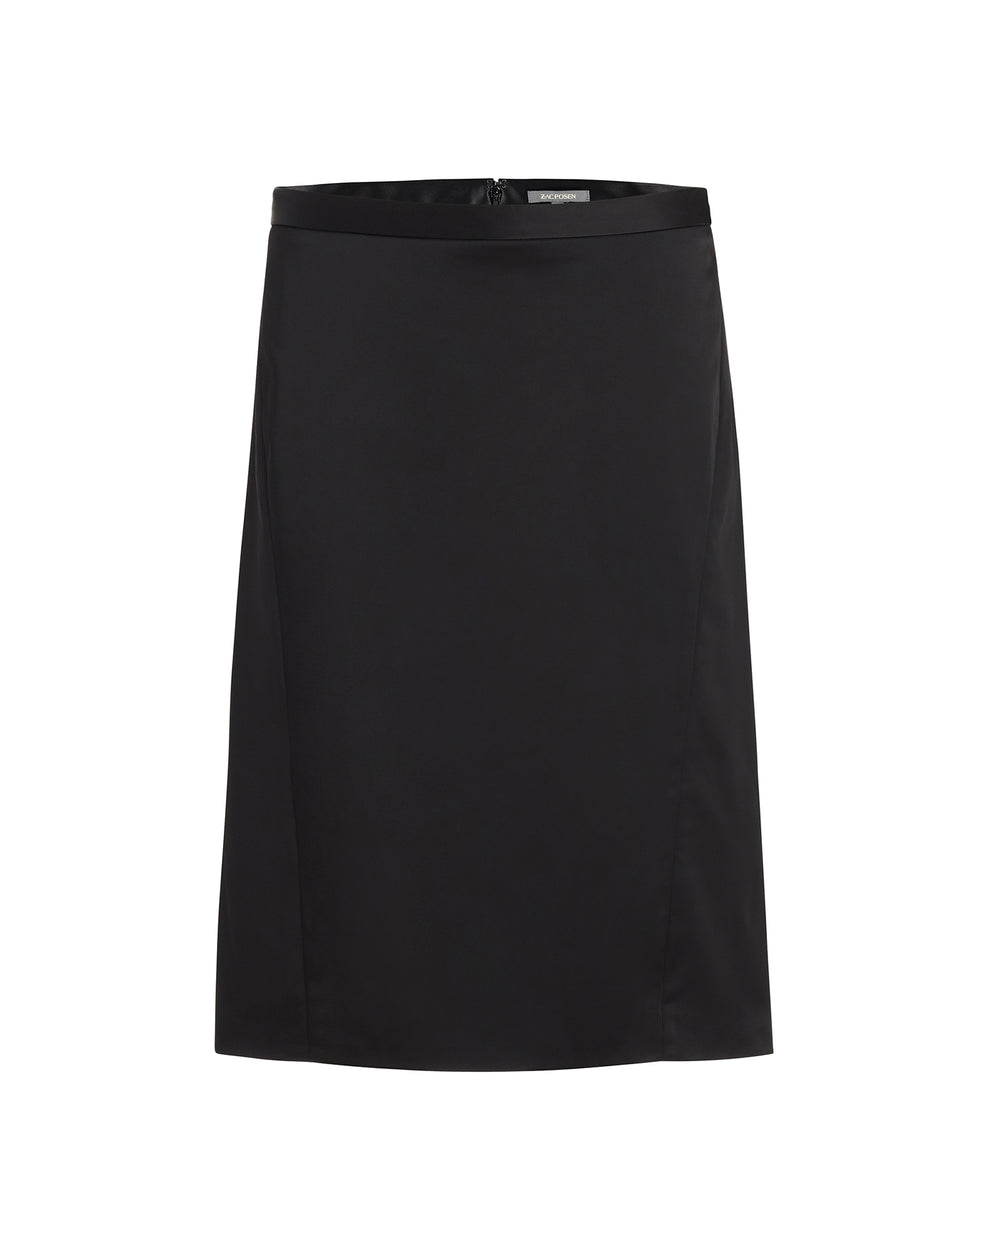 Zac Posen Black Satin Pencil Skirt – 11 Honoré